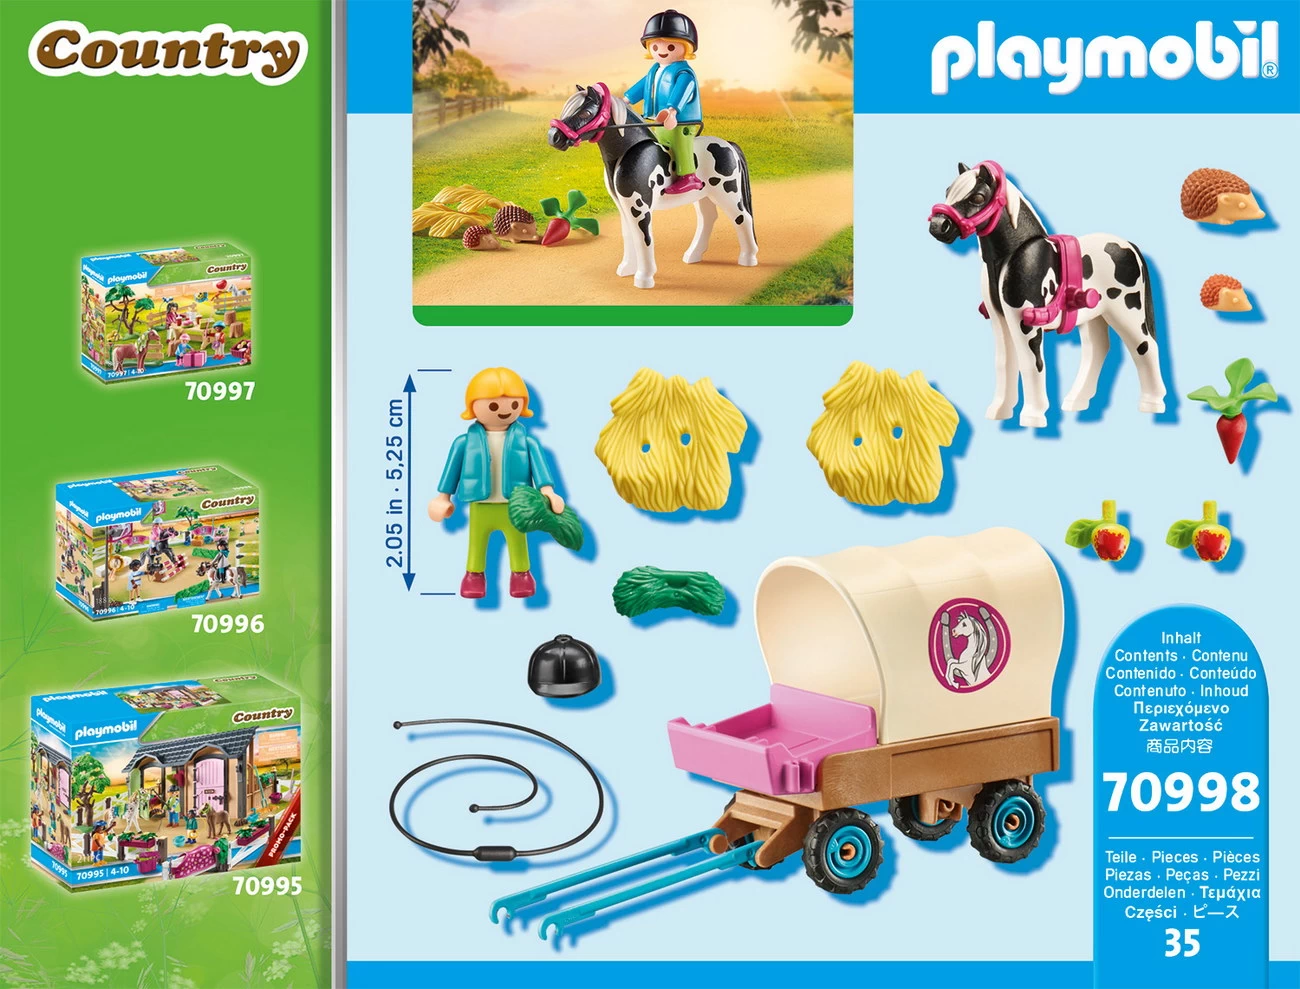 Playmobil 70998 - Ponykutsche (Country)